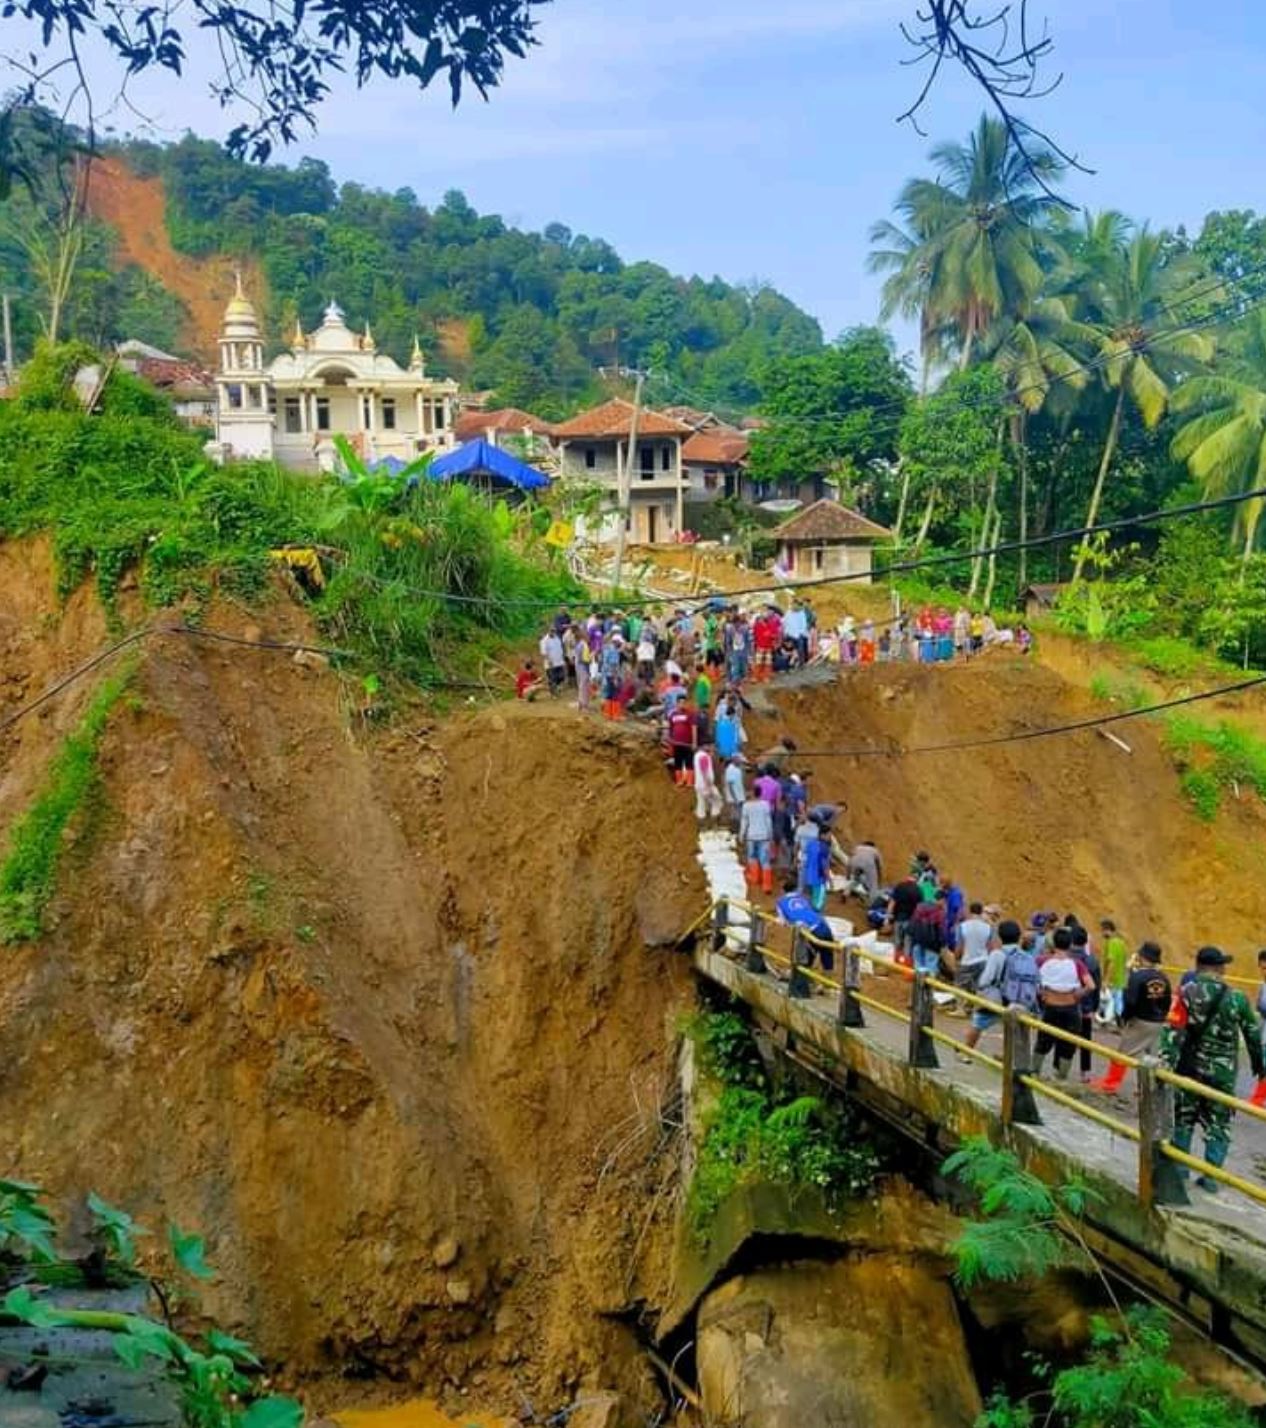 A landslide in Cinyiru, Indonesia